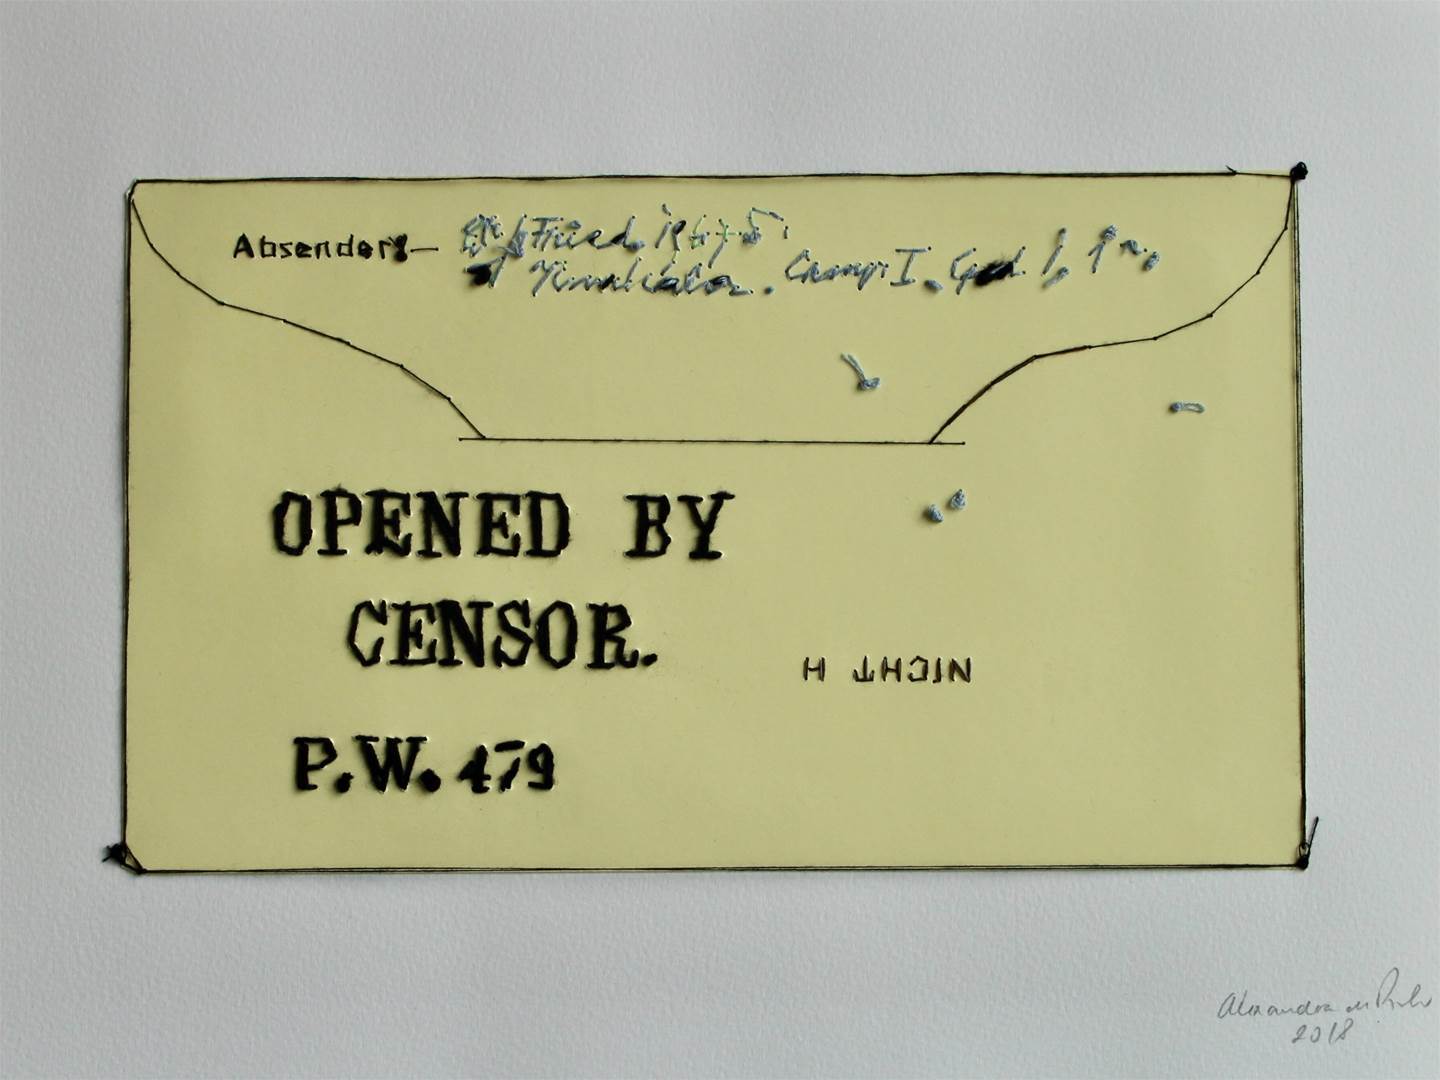 Openend by censor, original   Dessin et illustration par Alexandra de Pinho